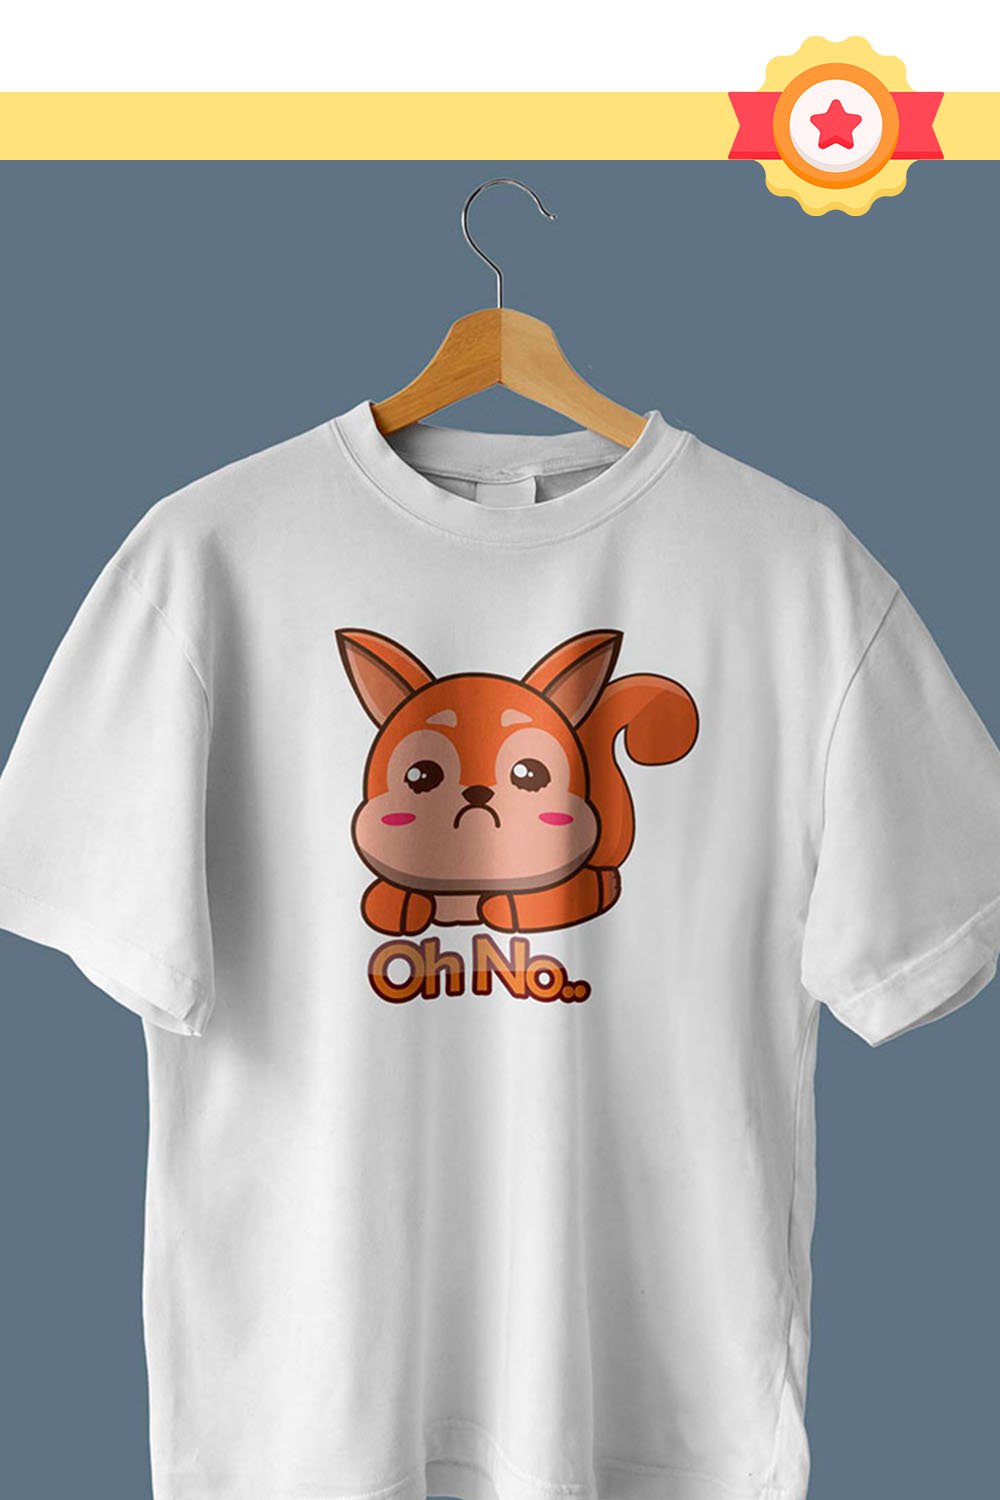 Cute Squirrel Sad Illustration T-Shirt Pinterest image.